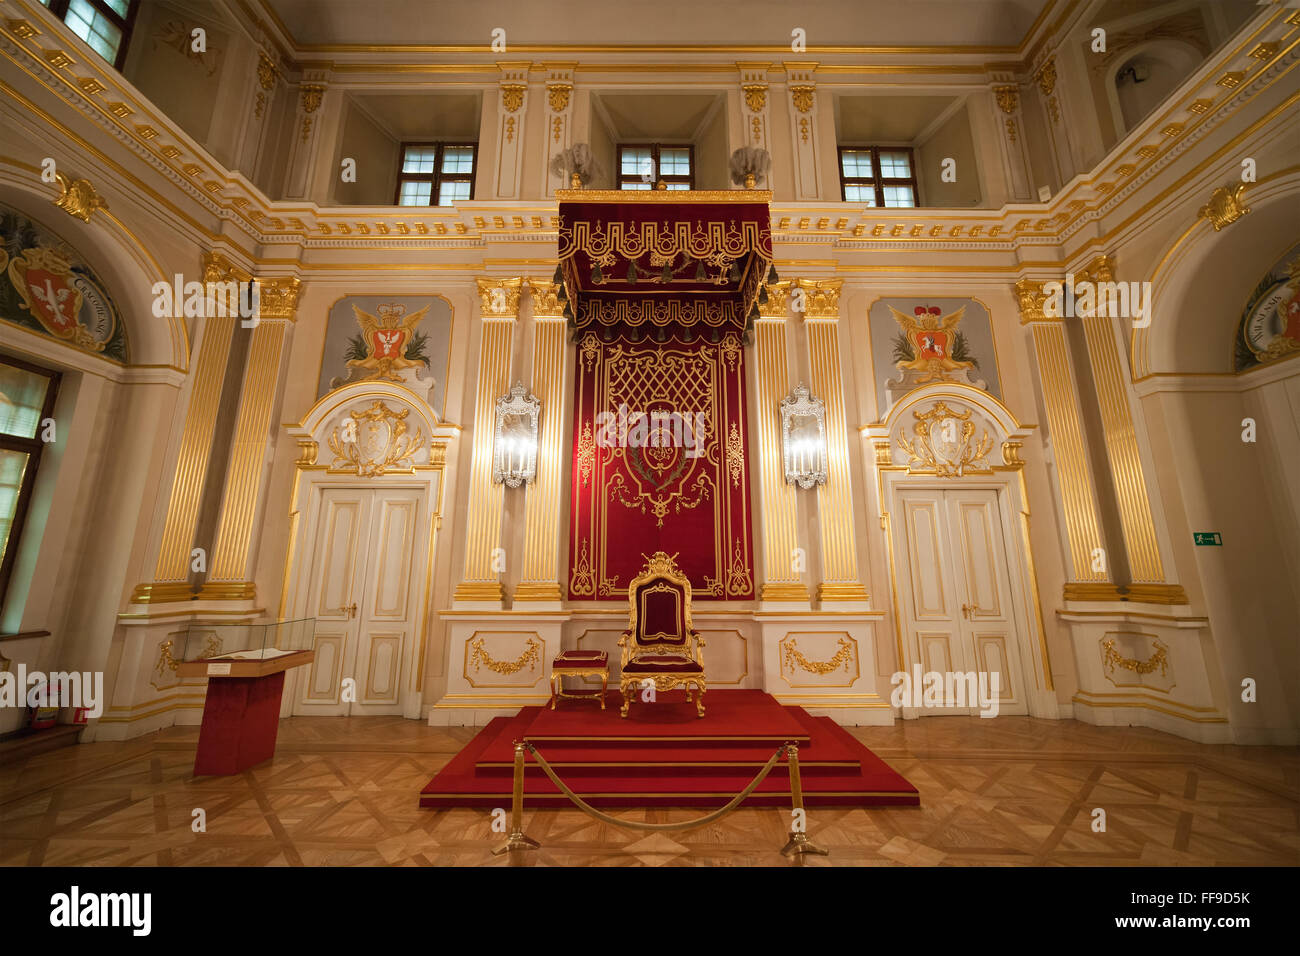 Poland, city of Warsaw, Royal Castle interior, throne in Senators Chamber Stock Photo